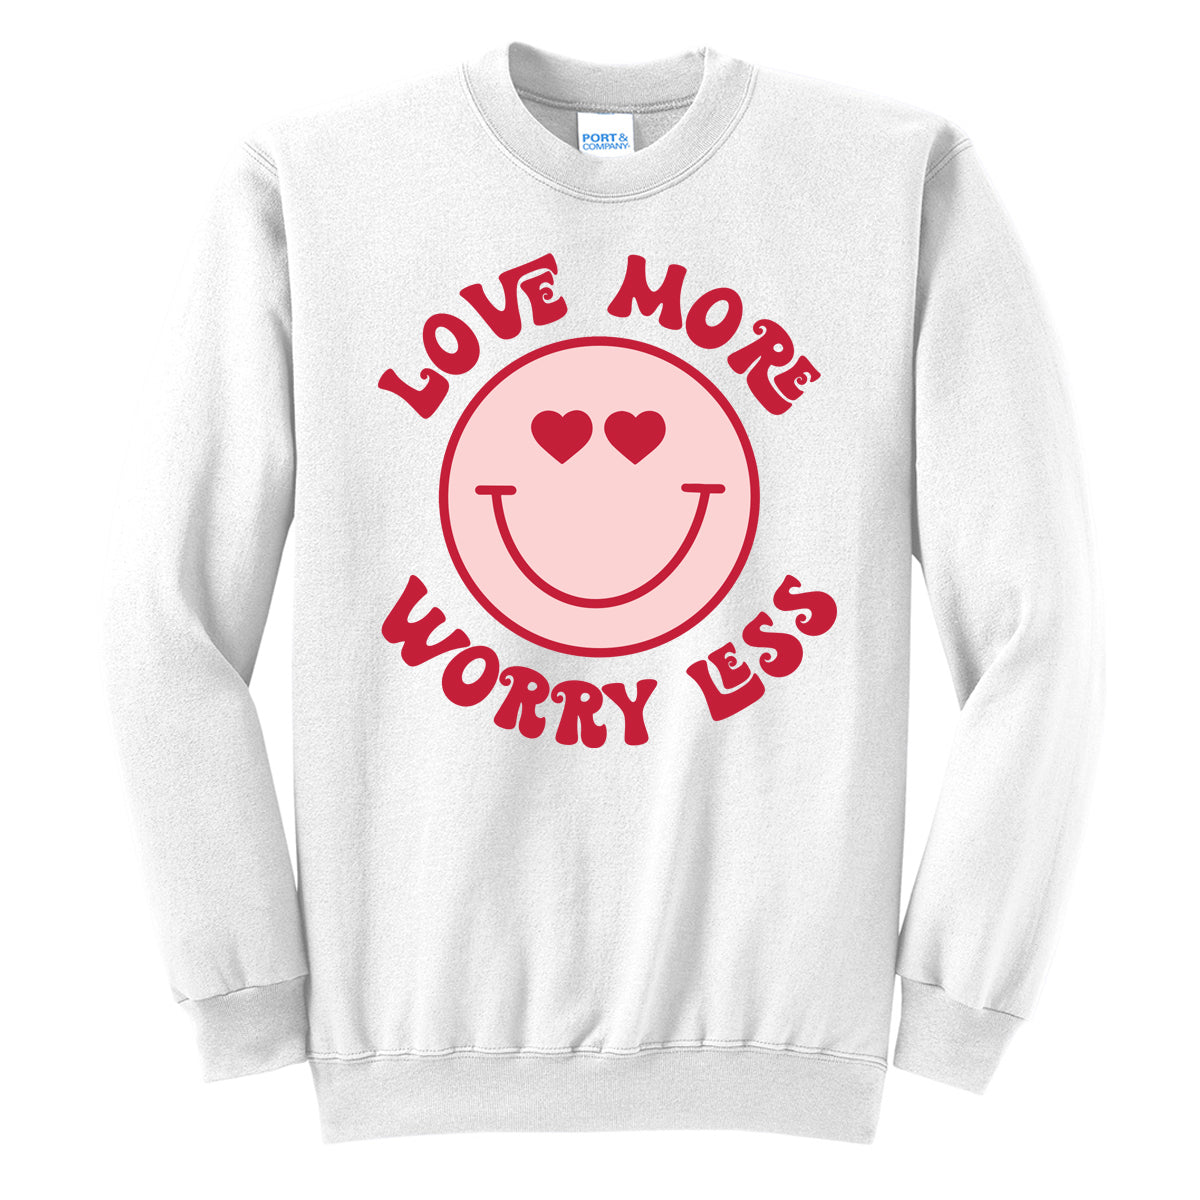 Love More Worry Less - White (Tee/Hoodie/Sweatshirt) - Southern Grace Creations